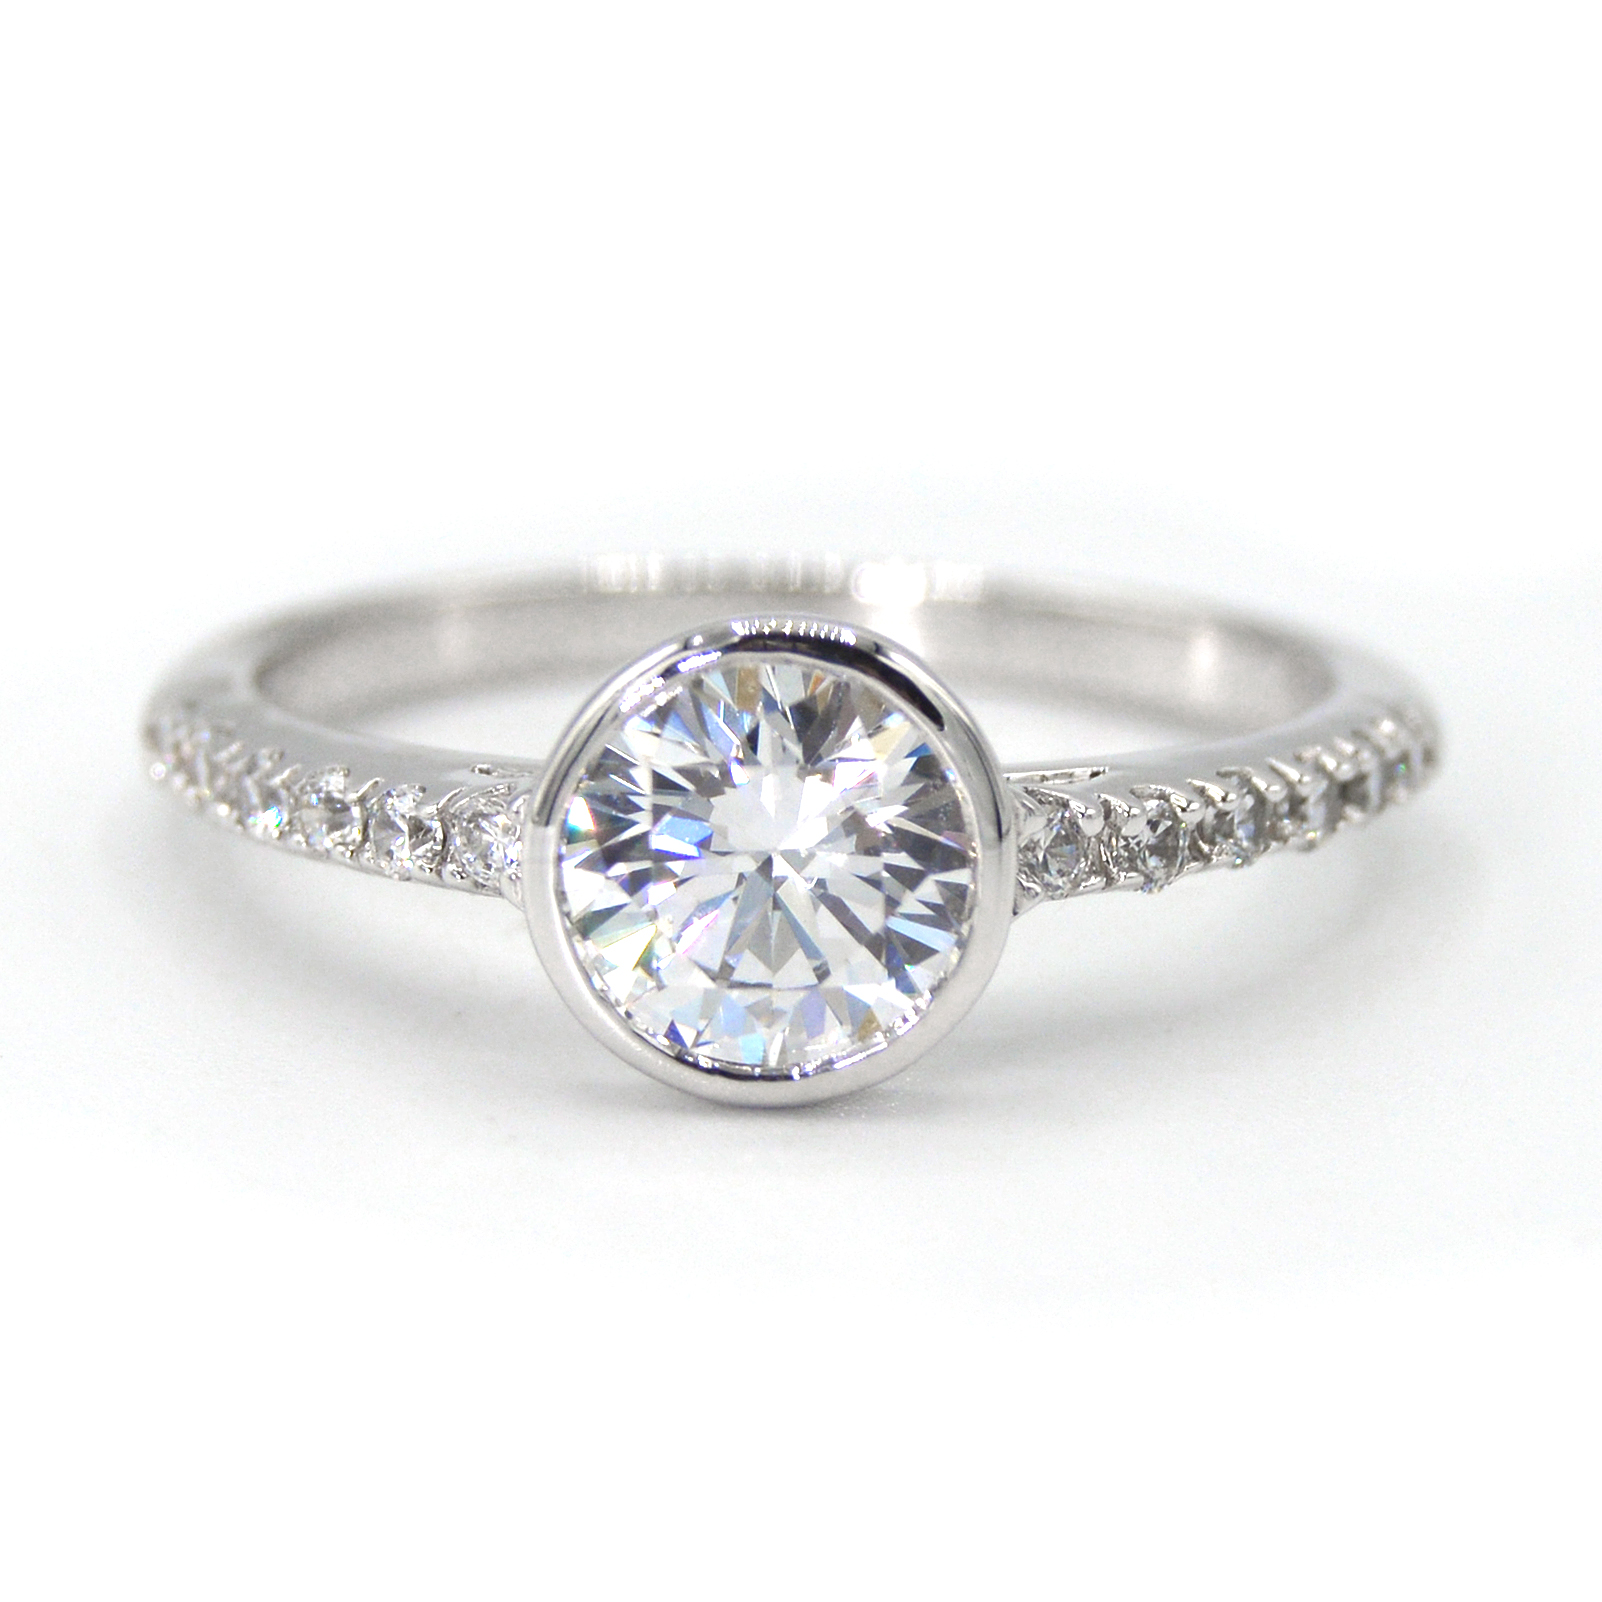 Platinum Bezel Set Diamond Accented Engagement Ring | M. Pope & Co.
